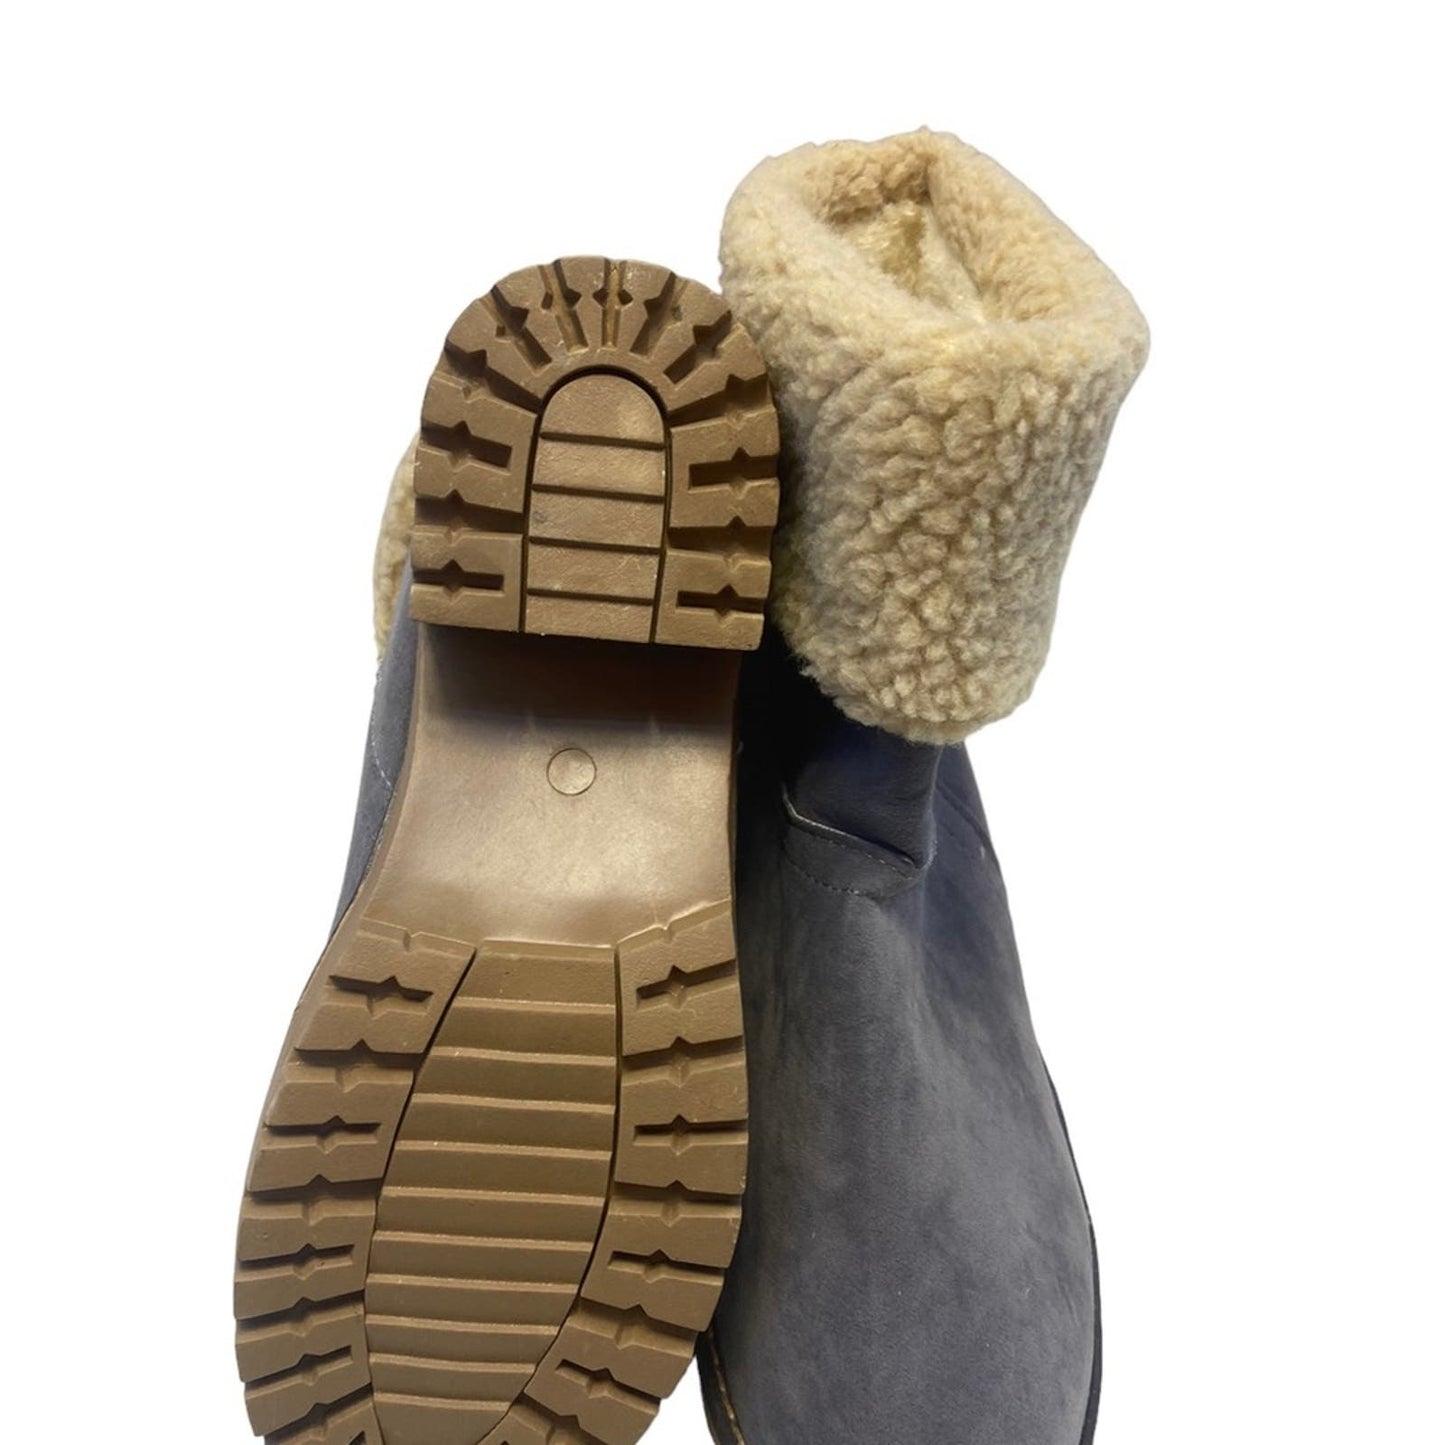 Lt. Charcoal Gray Fur Boots- NWOT- Size 10